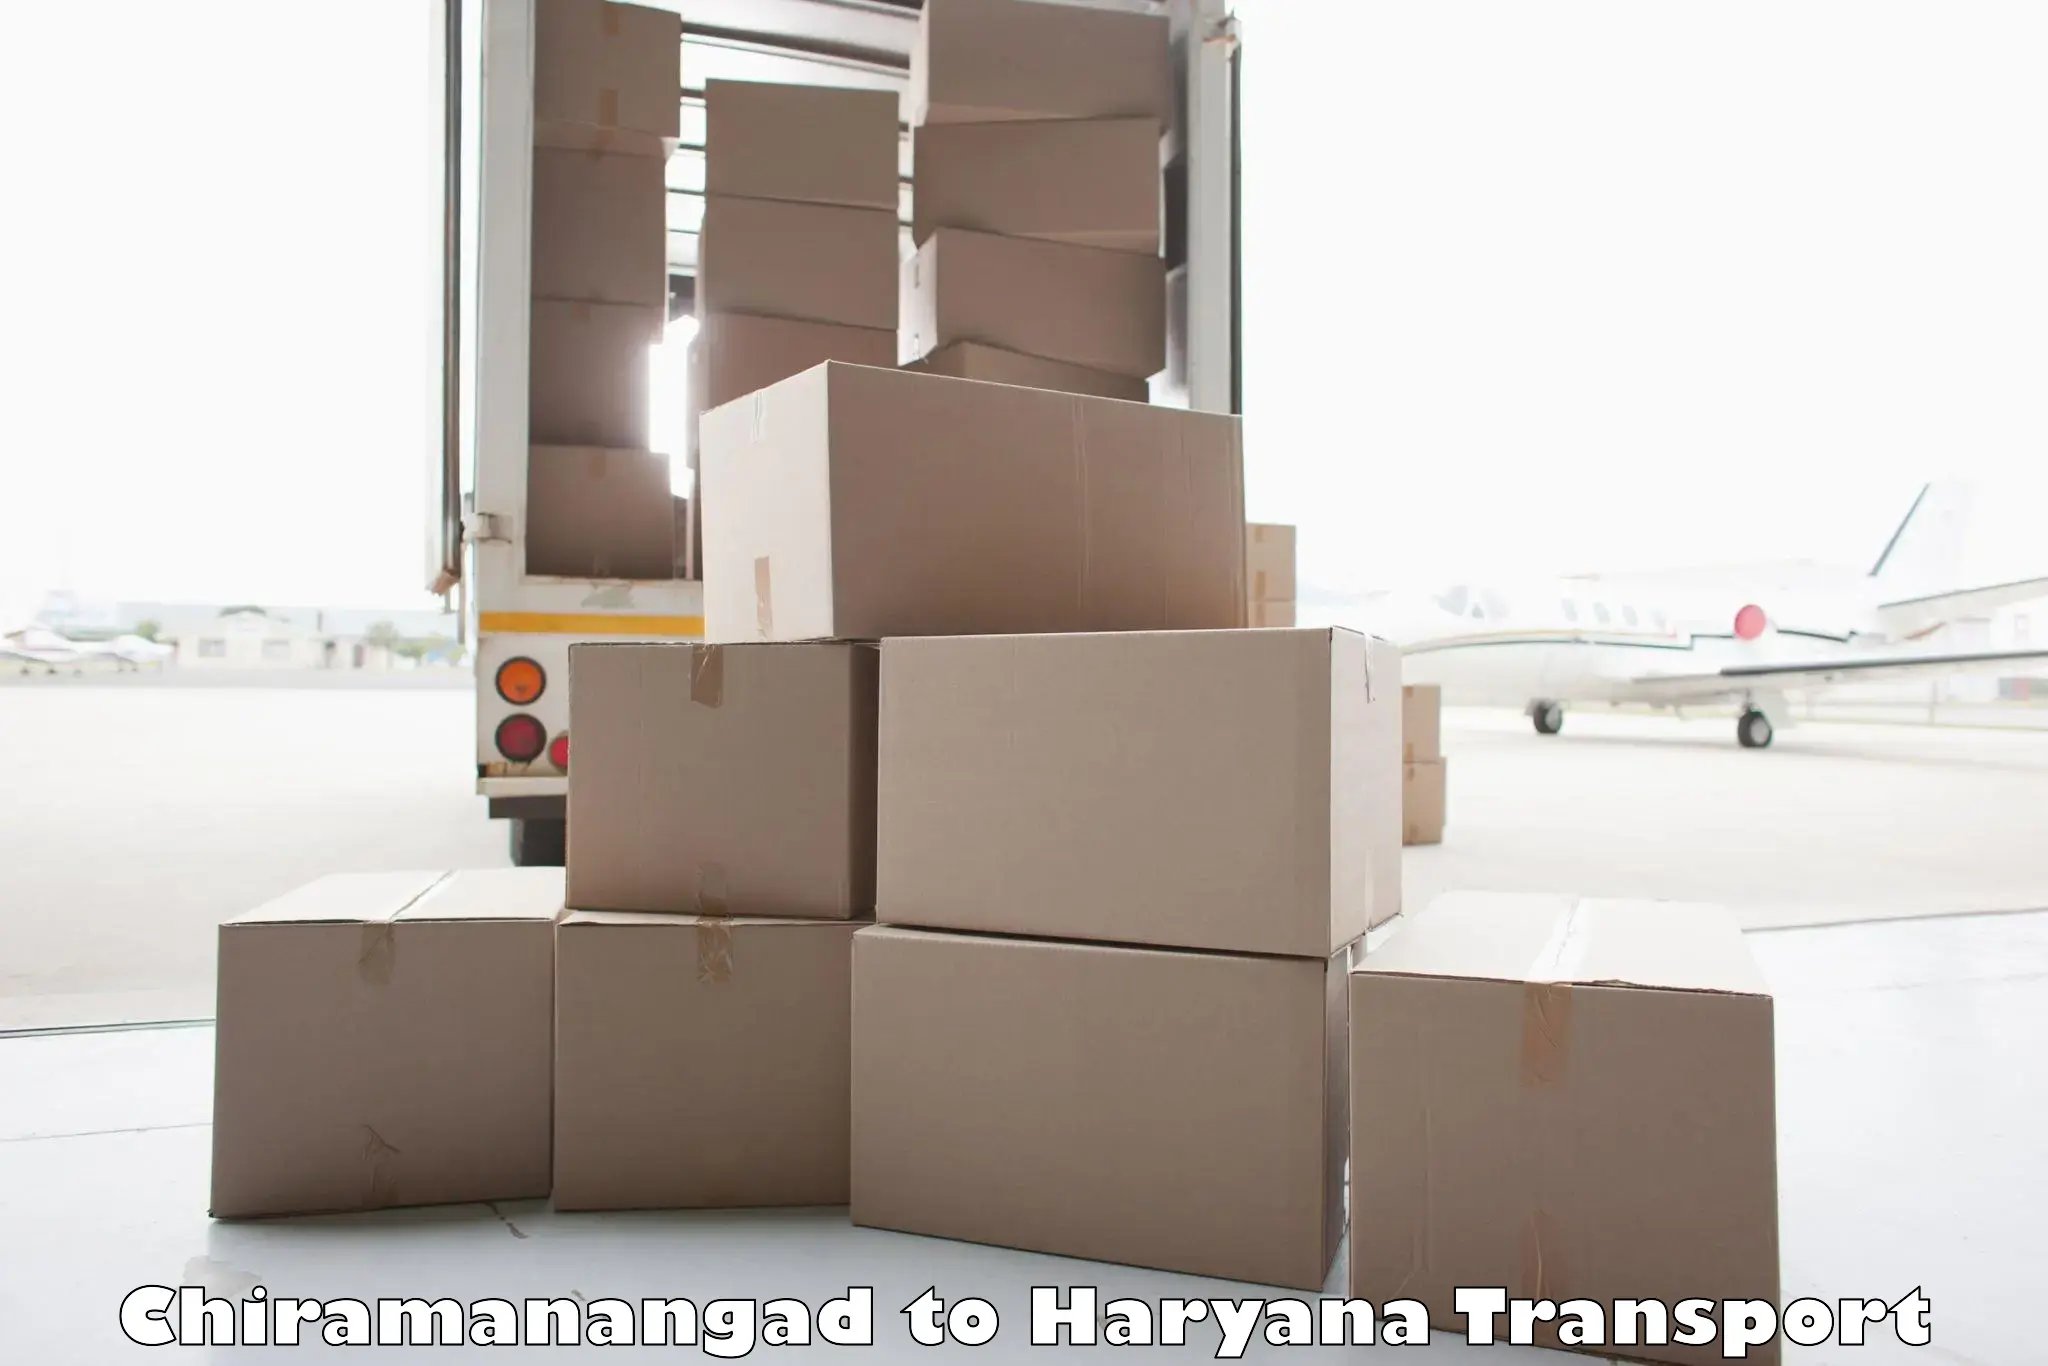 Commercial transport service Chiramanangad to Haryana